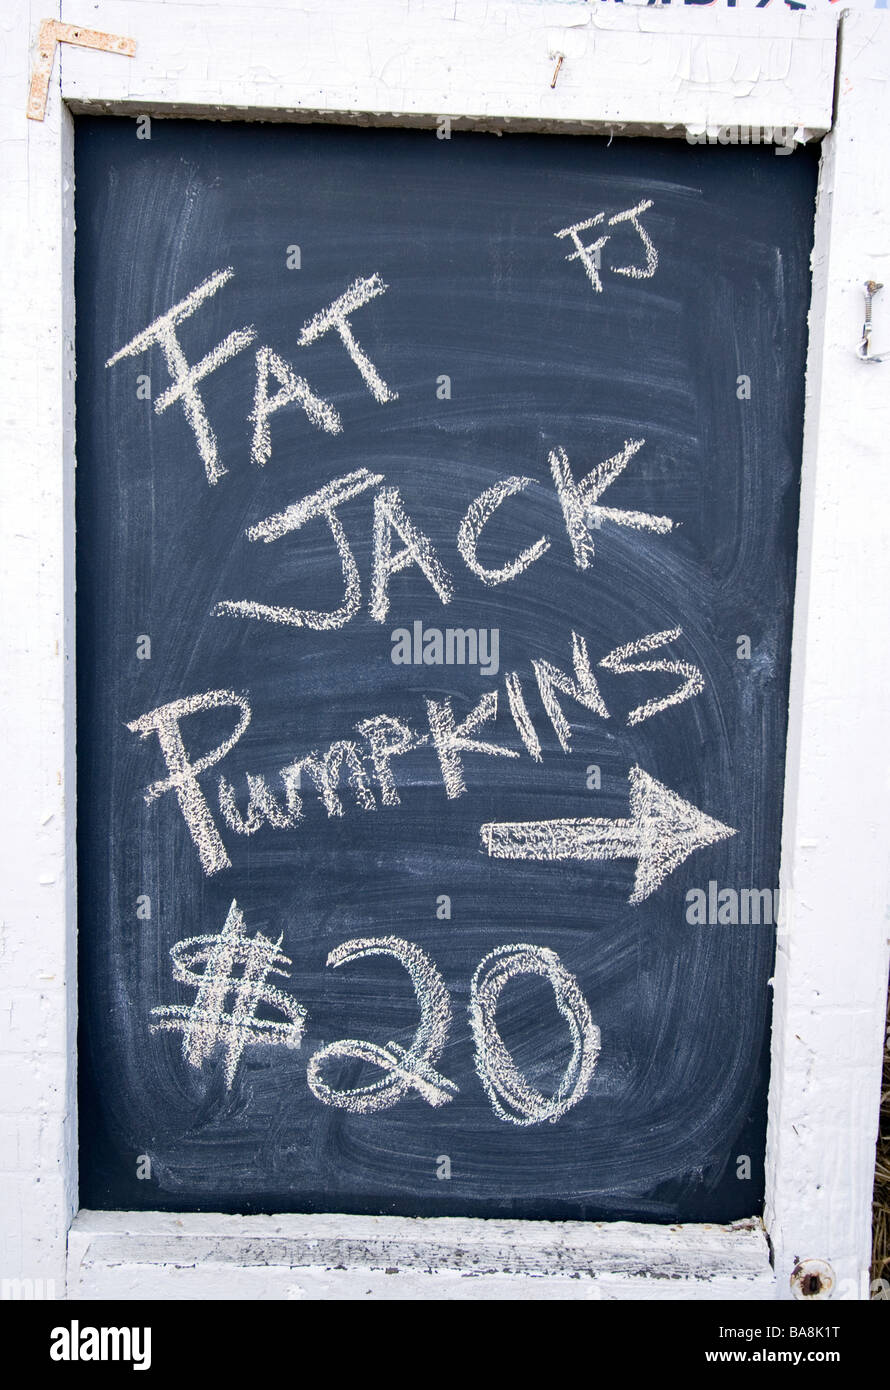 pumpkins sale blackboard Stock Photo